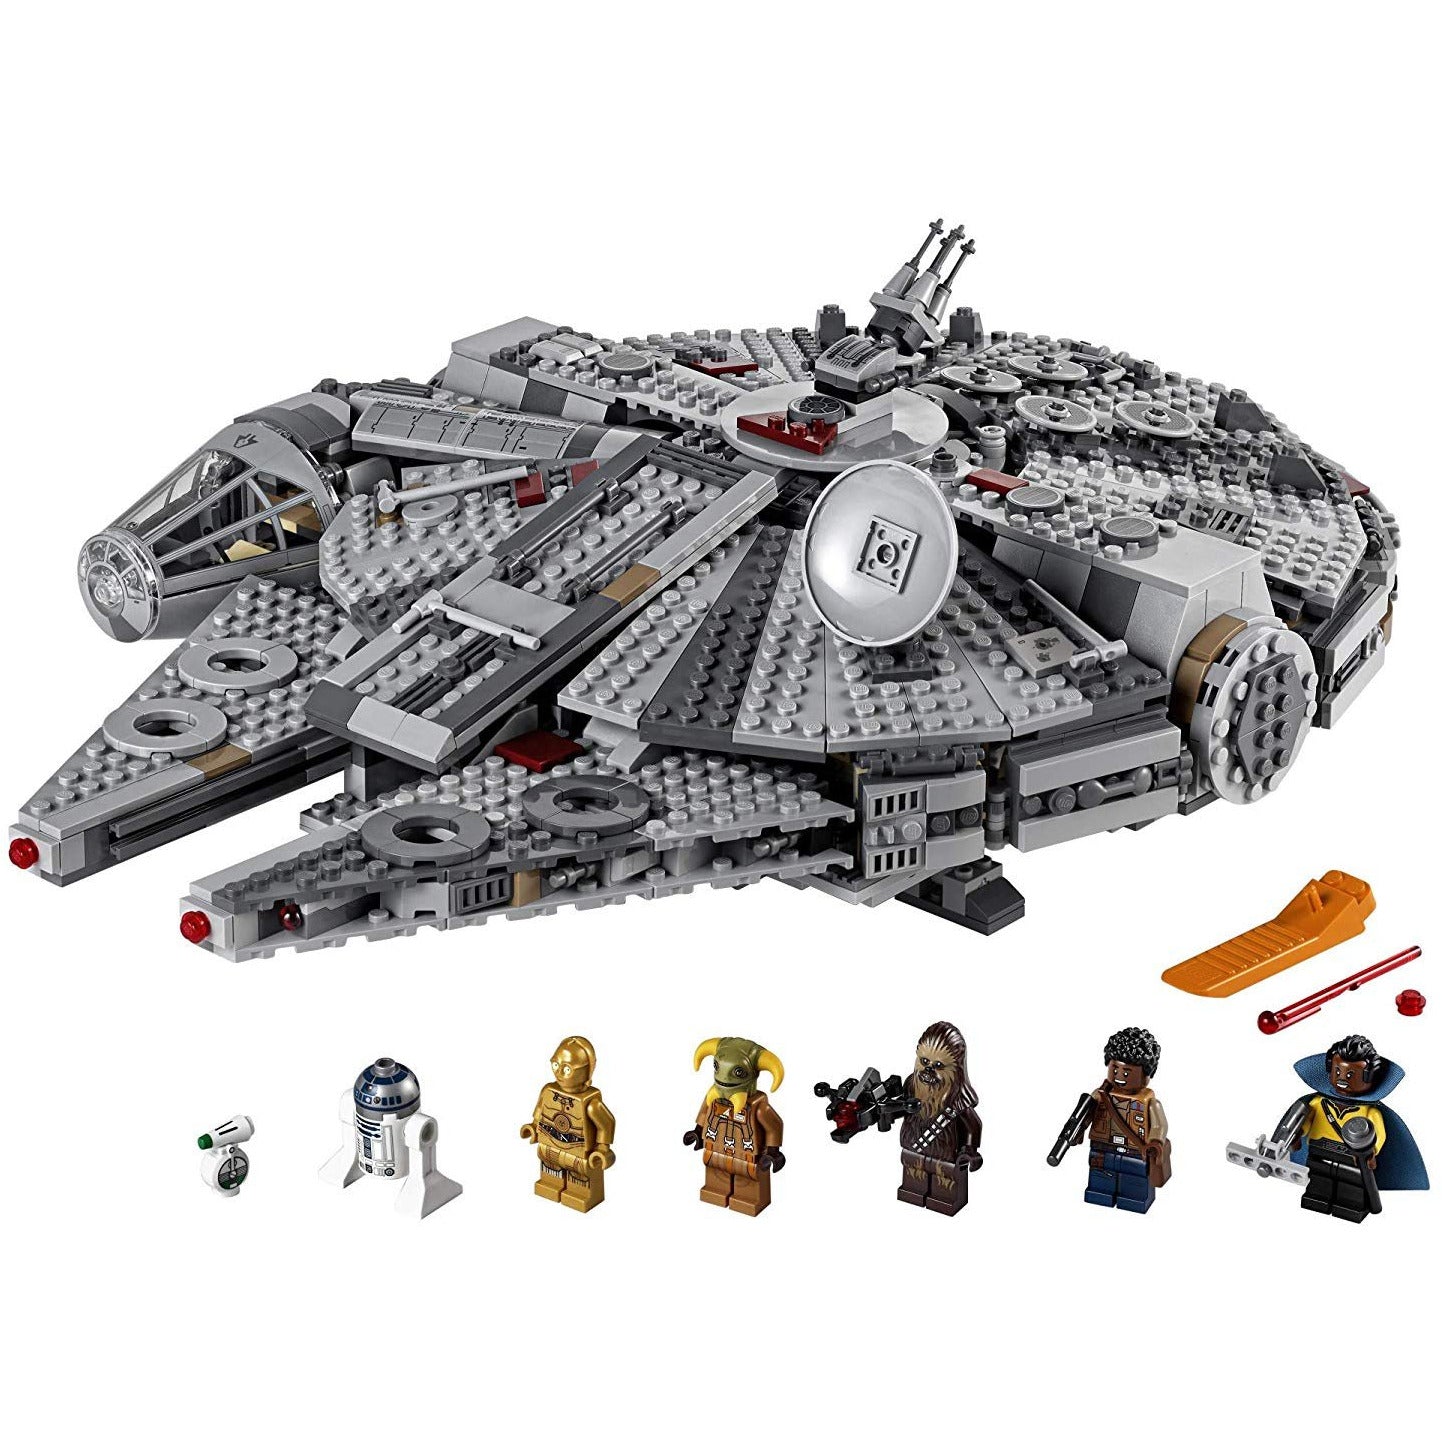 Series: Lego Star Wars: Millennium Falcon (The Rise of Skywalker) 75257